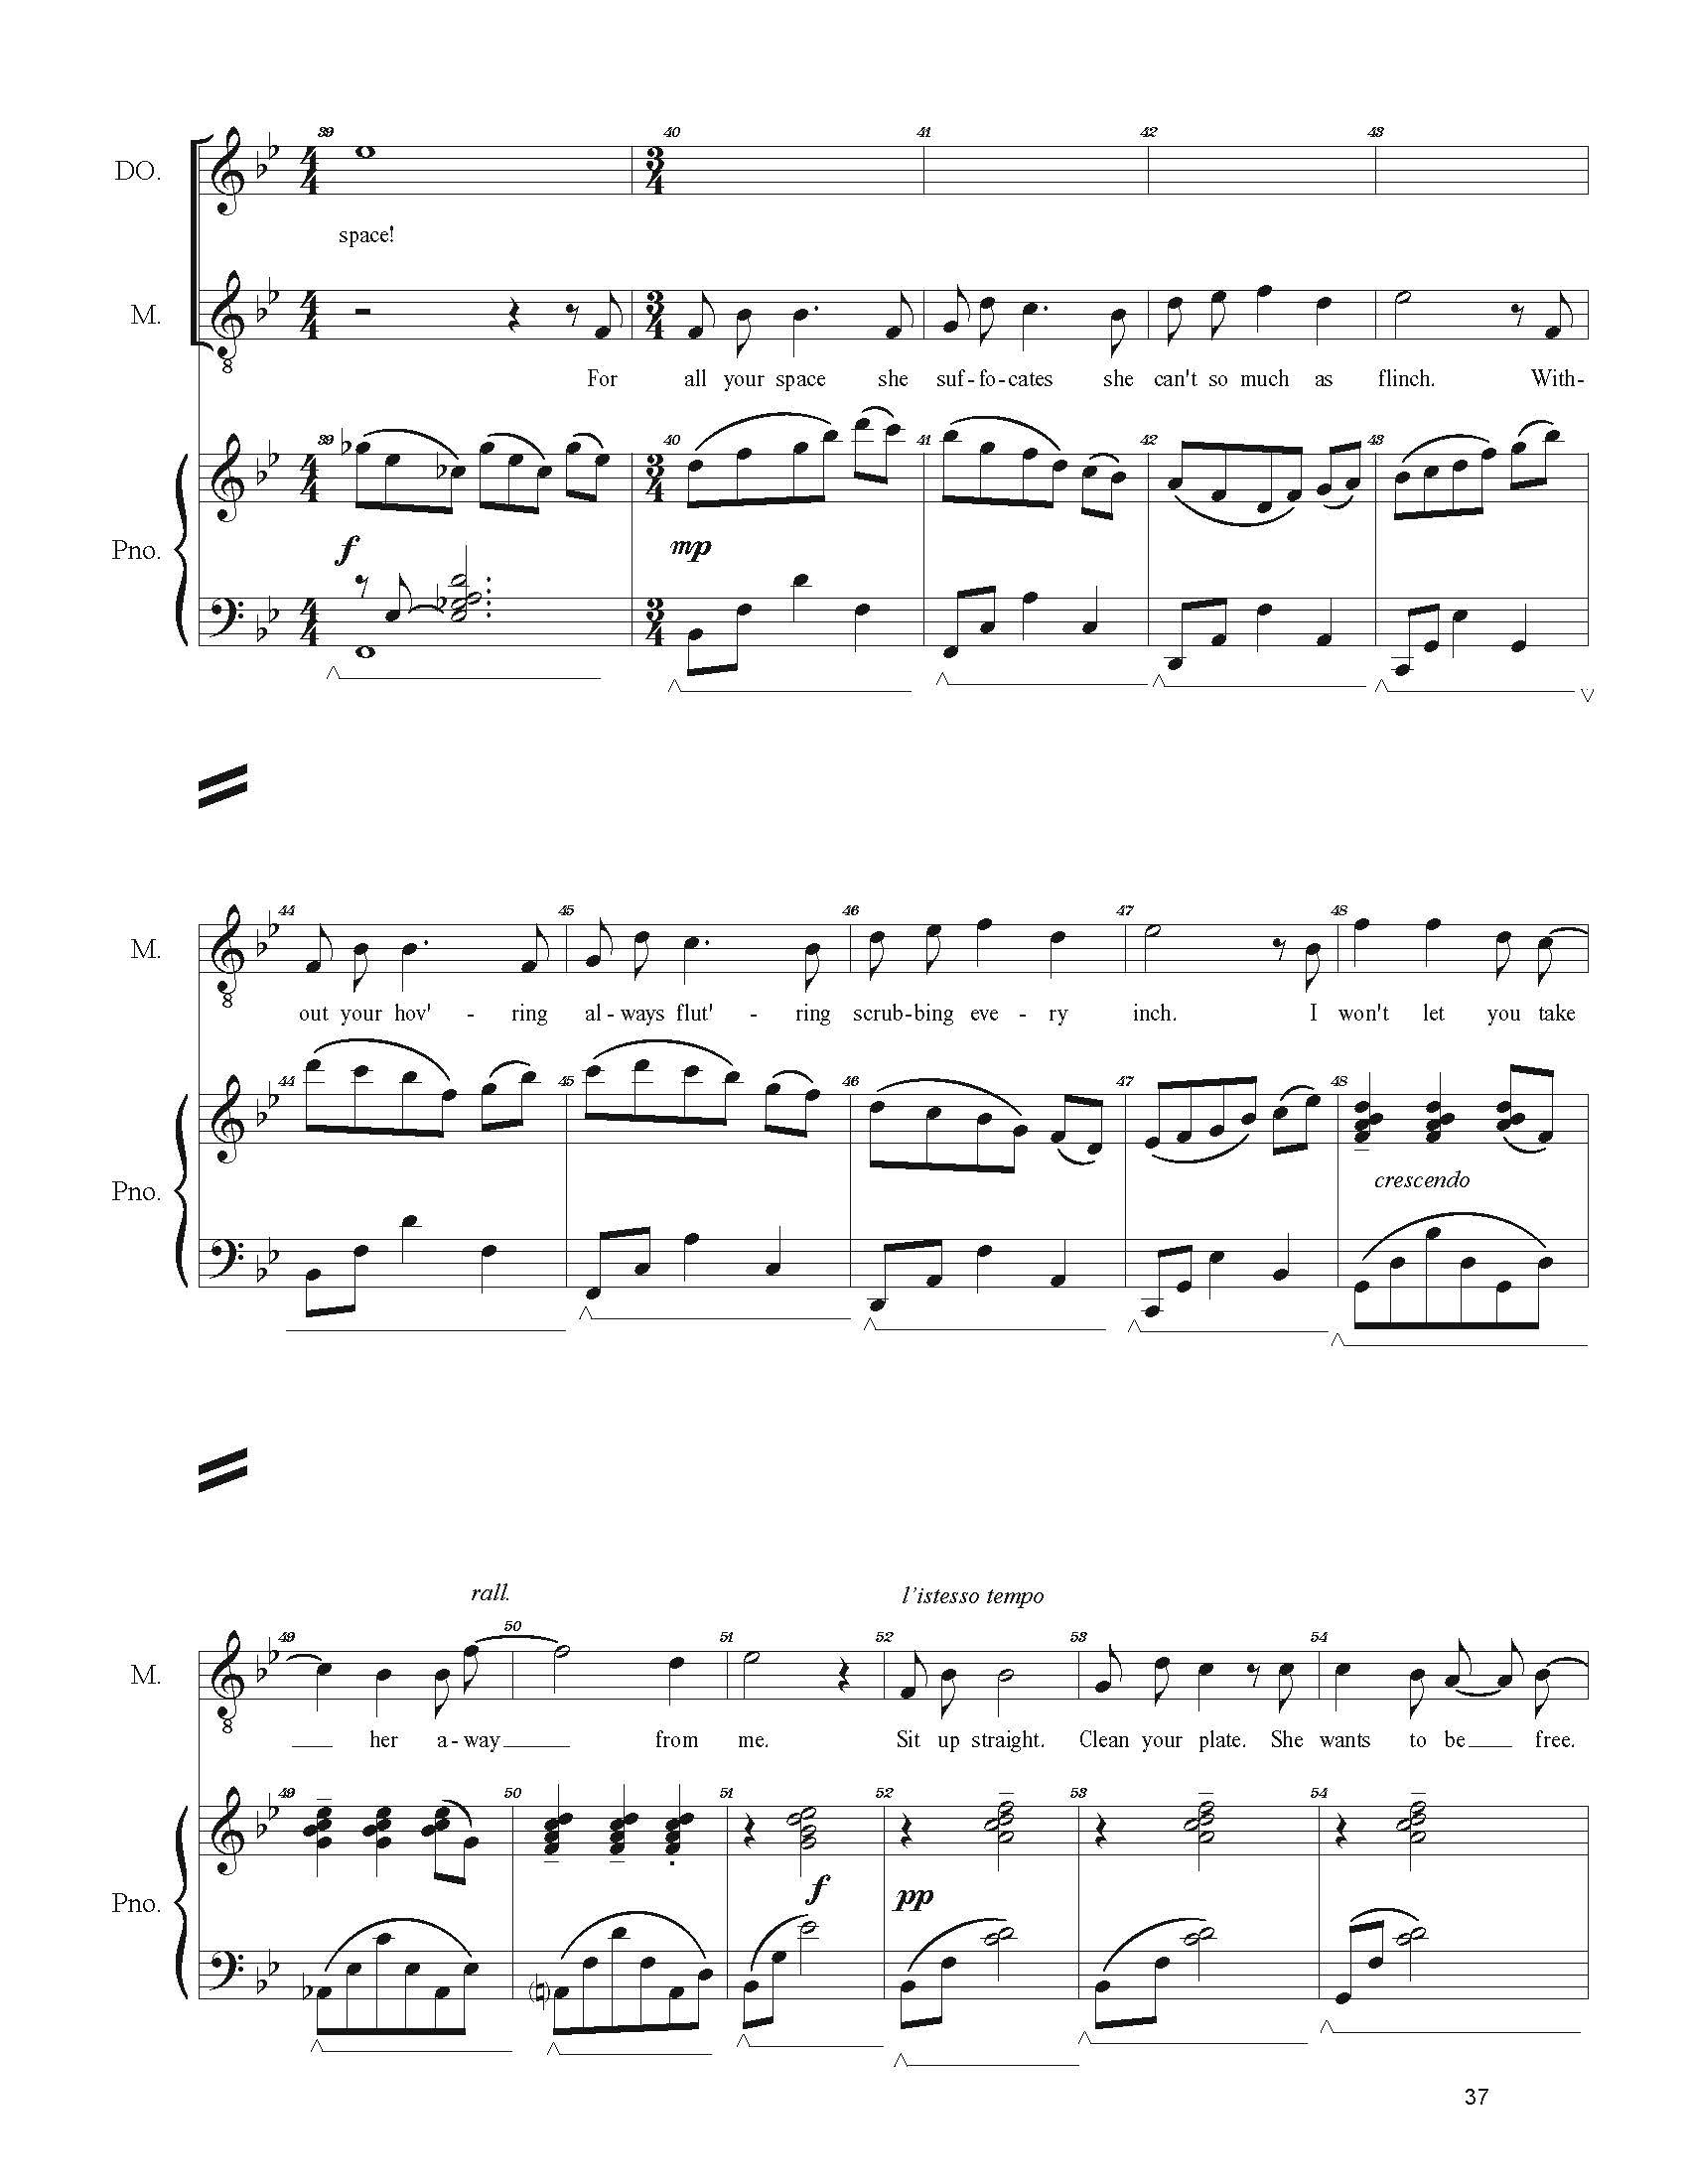 FULL PIANO VOCAL SCORE DRAFT 1 - Score_Page_037.jpg